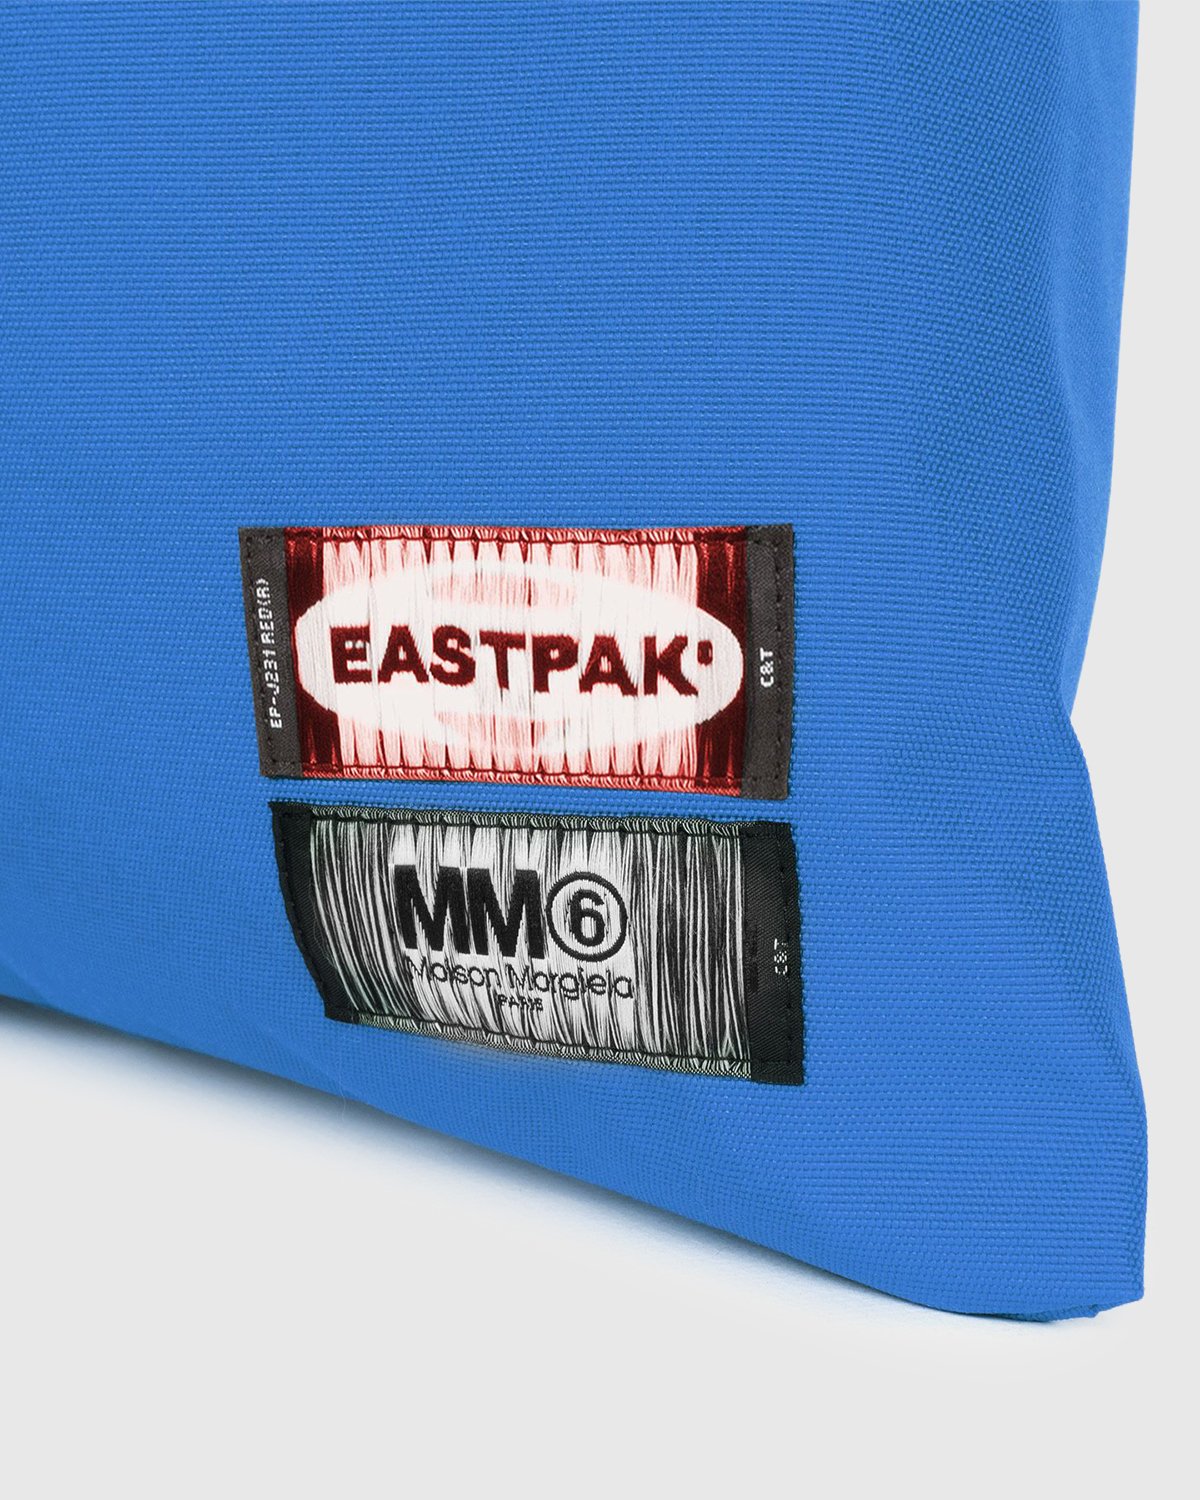 MM6 Maison Margiela x Eastpak - Shopping Bag Dazzling Blue - Accessories - Blue - Image 3